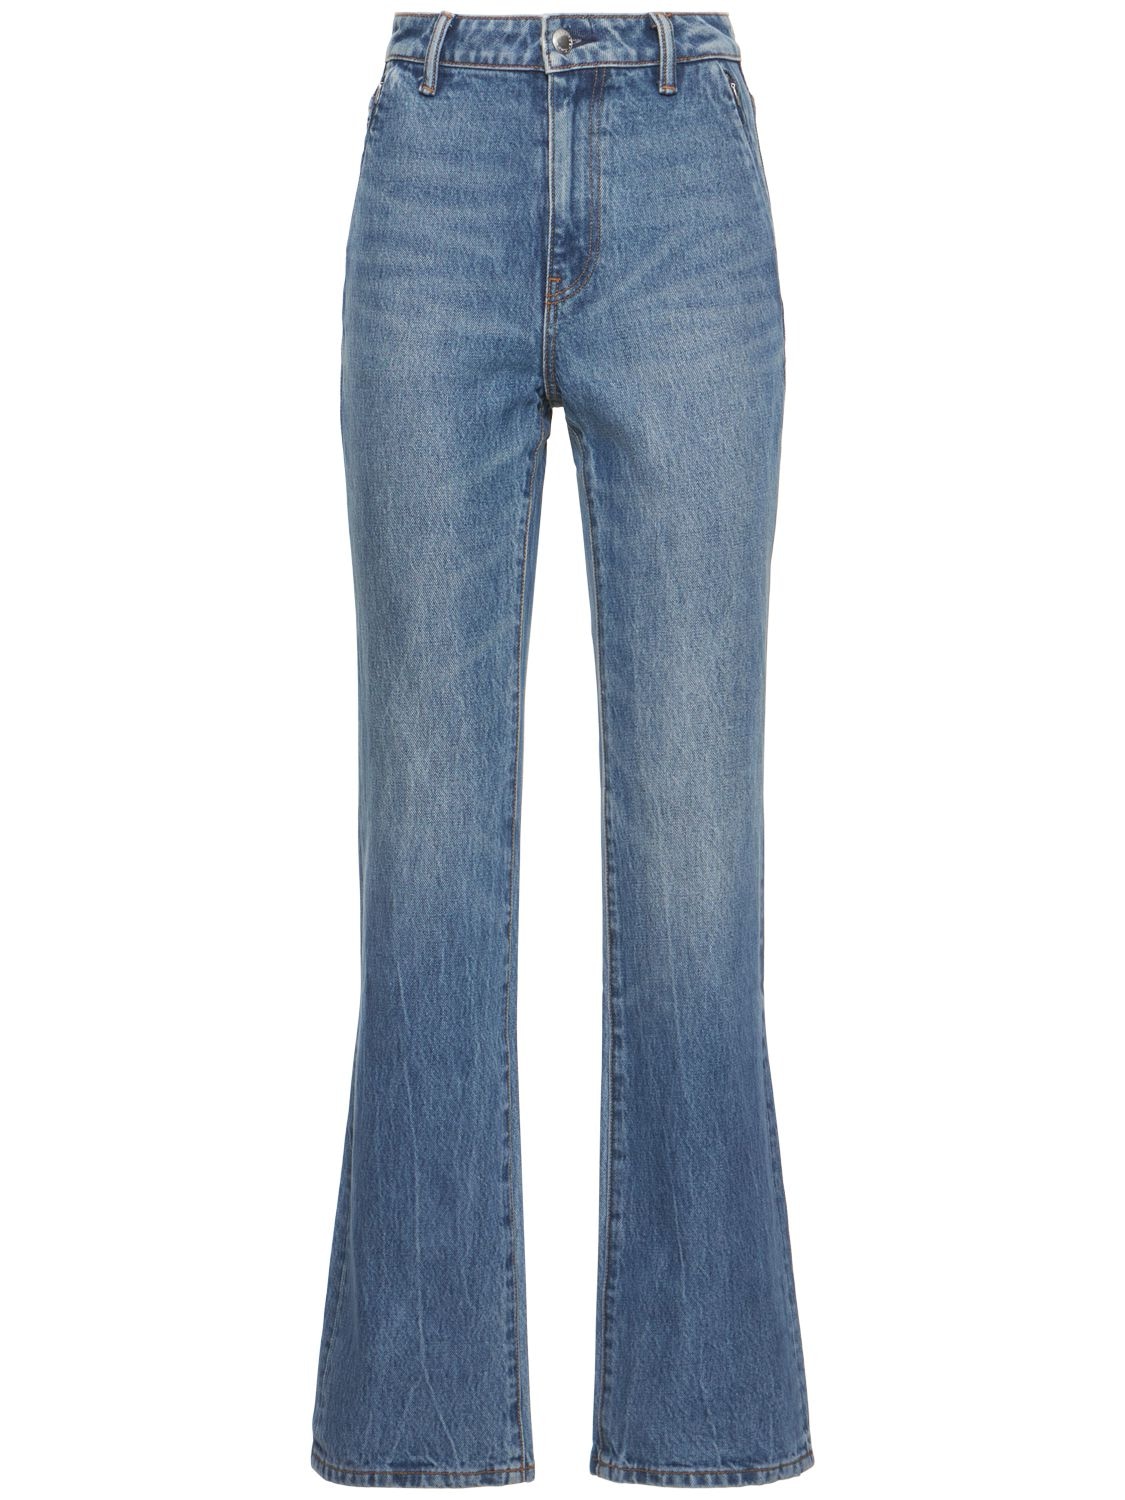 ALEXANDER WANG High-rise Slim Stacked Denim Jeans